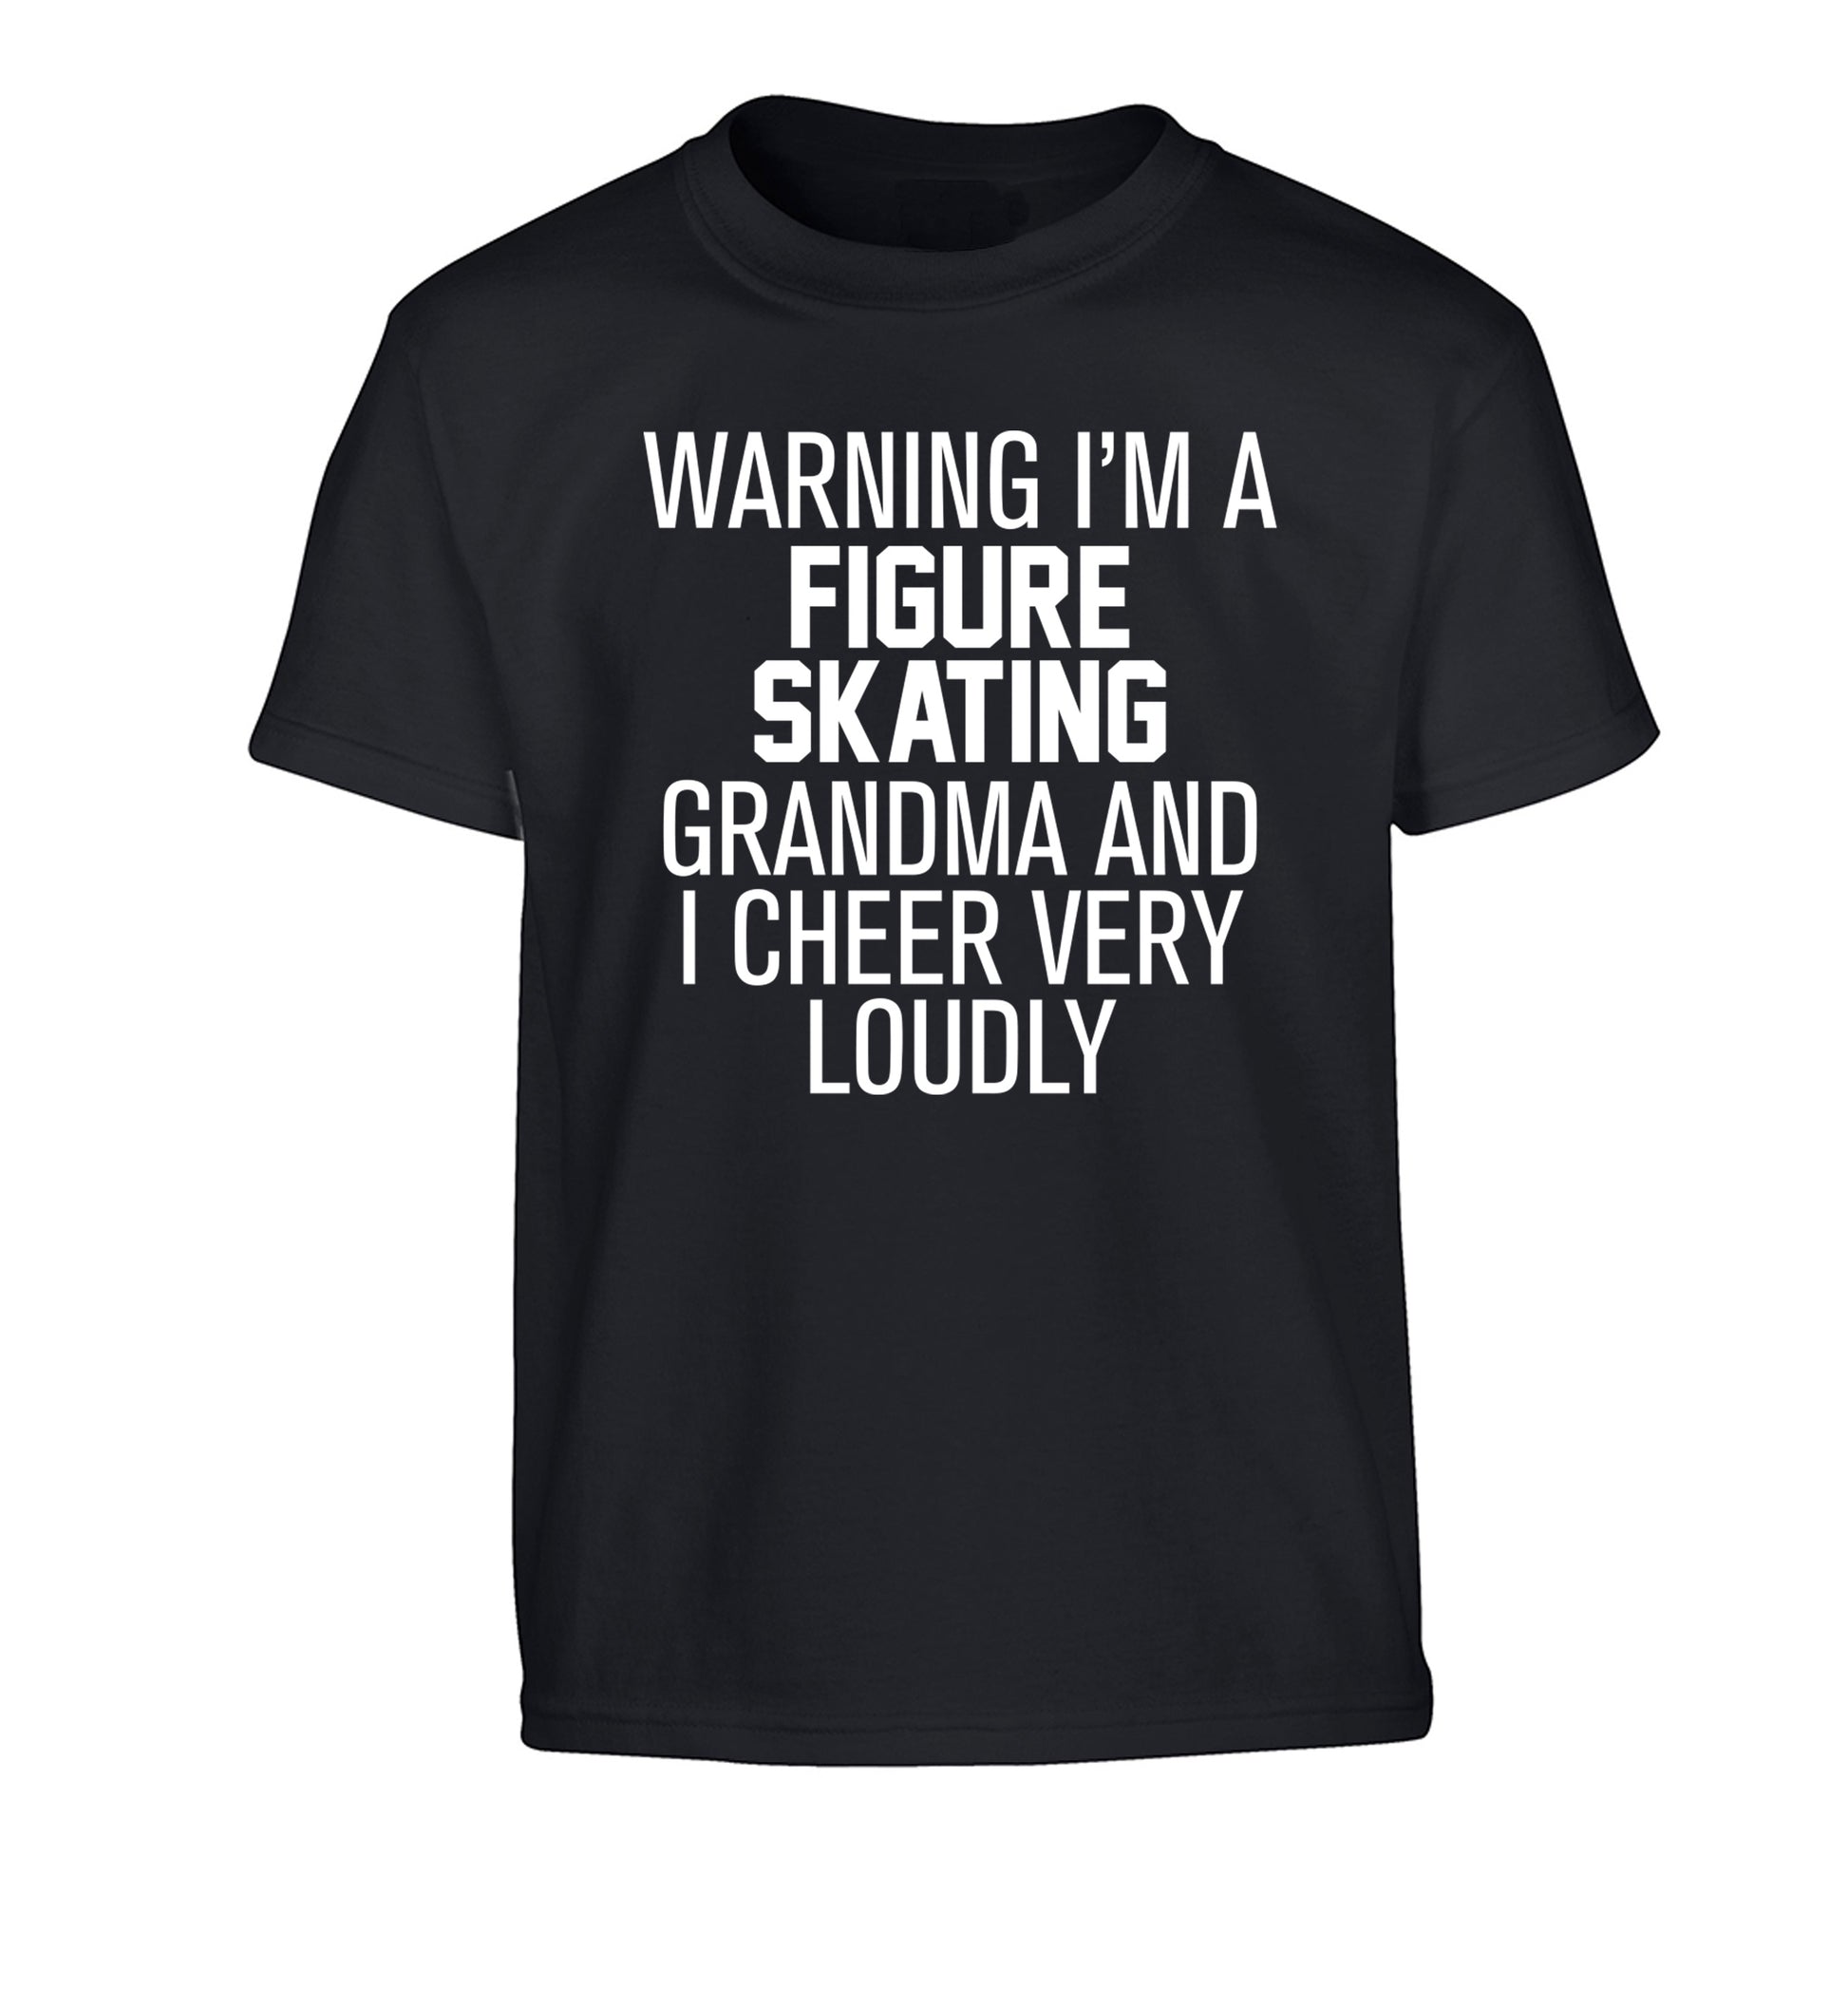 Warning I'm a figure skating grandma and I cheer very loudly Children's black Tshirt 12-14 Years